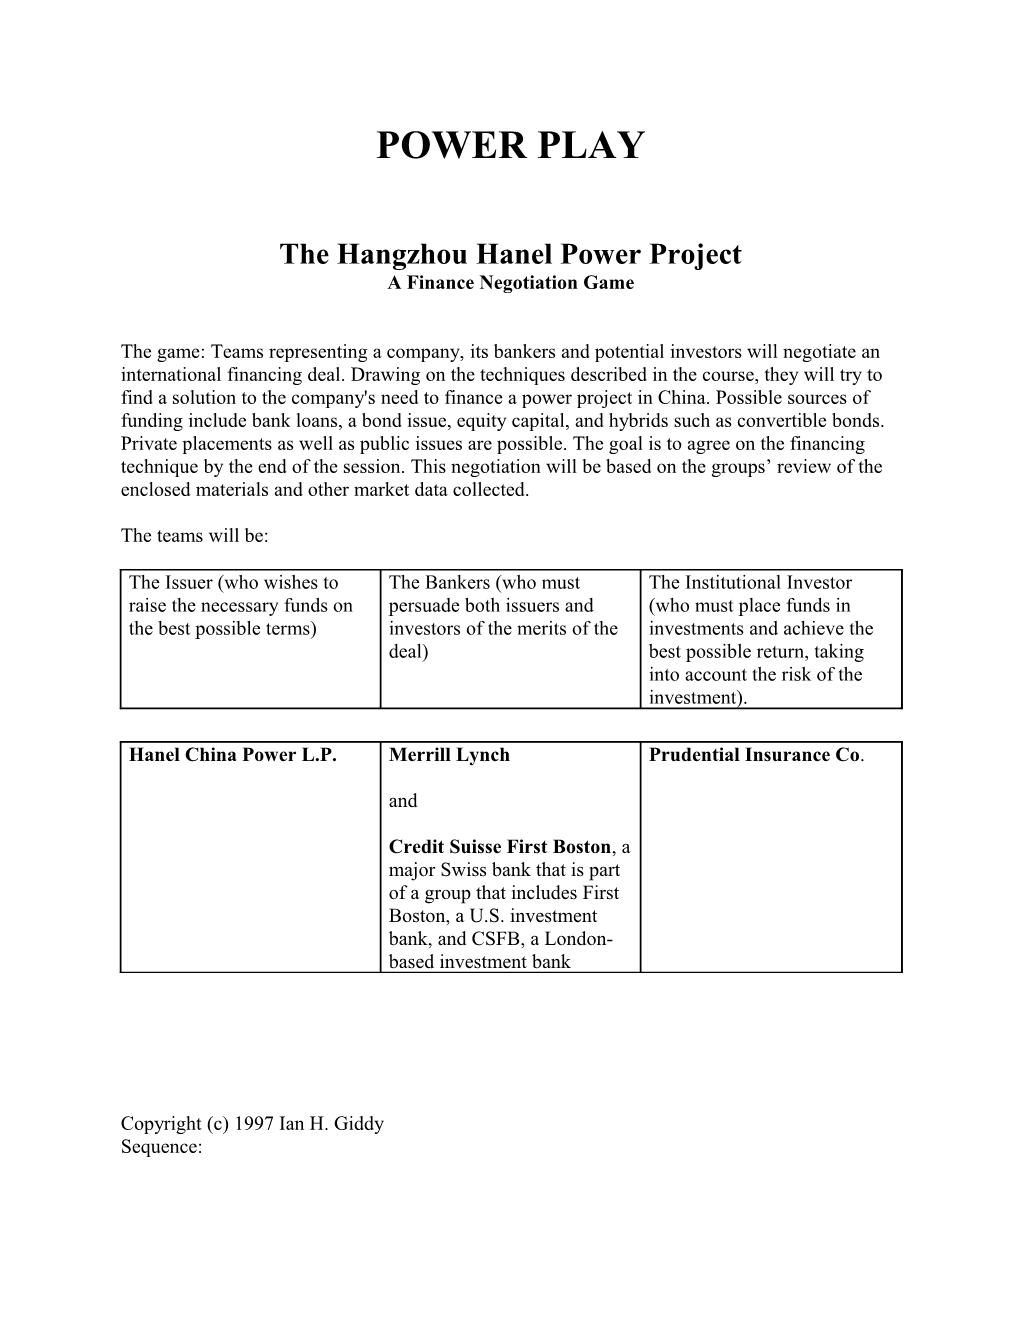 The Hangzhou Hanel Power Project